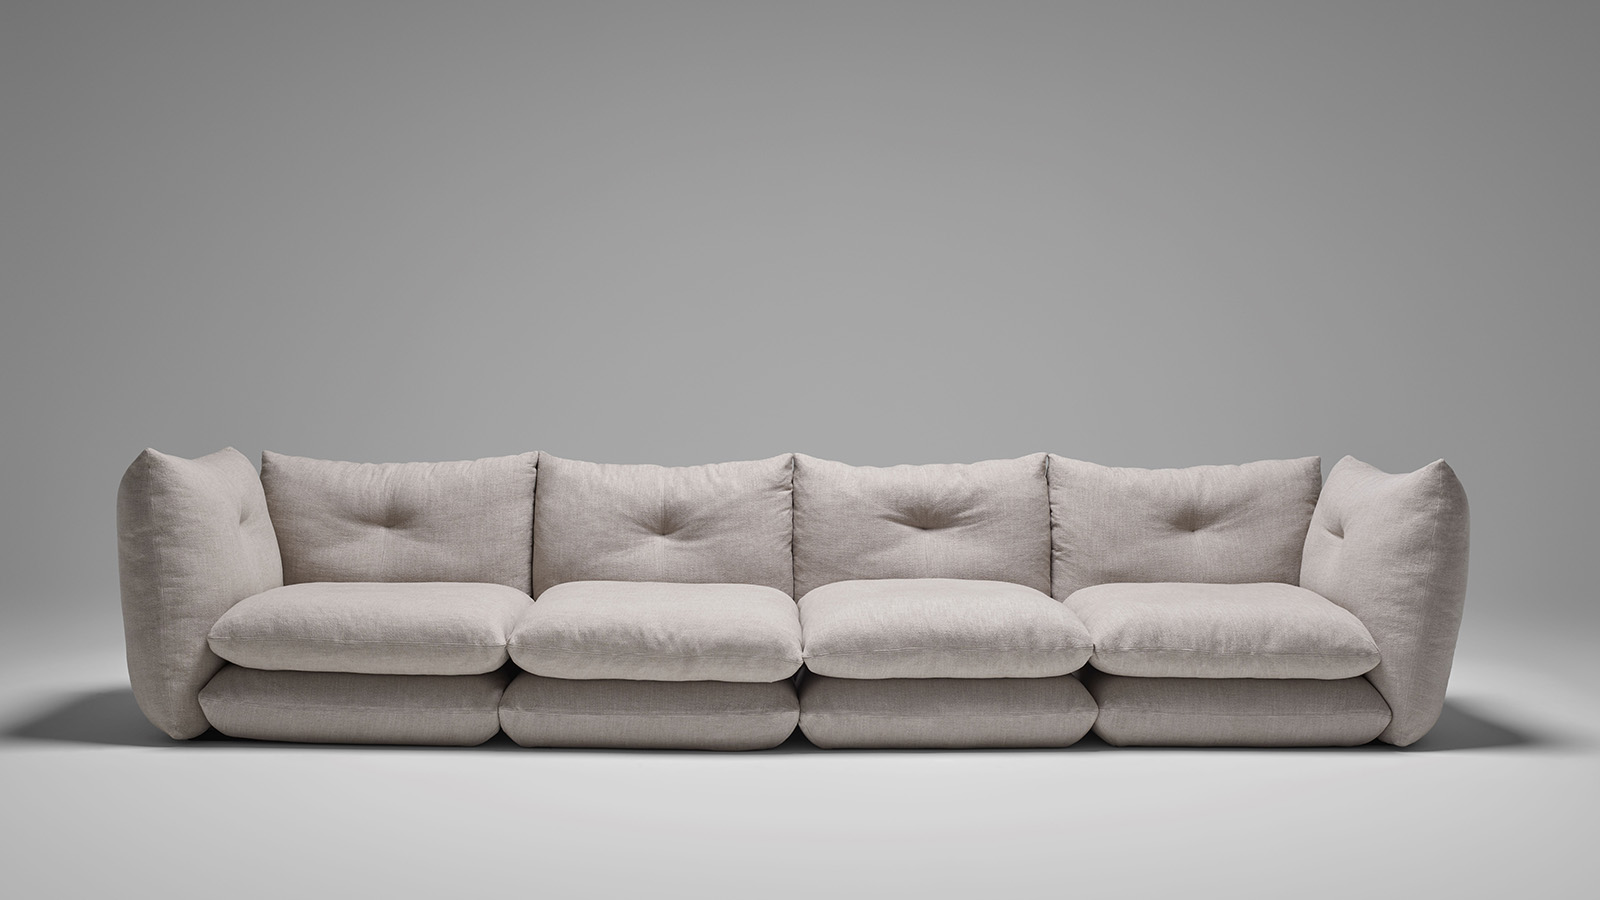 Four-seater ‘Pillo’ sofa by Willo Perron for Knoll